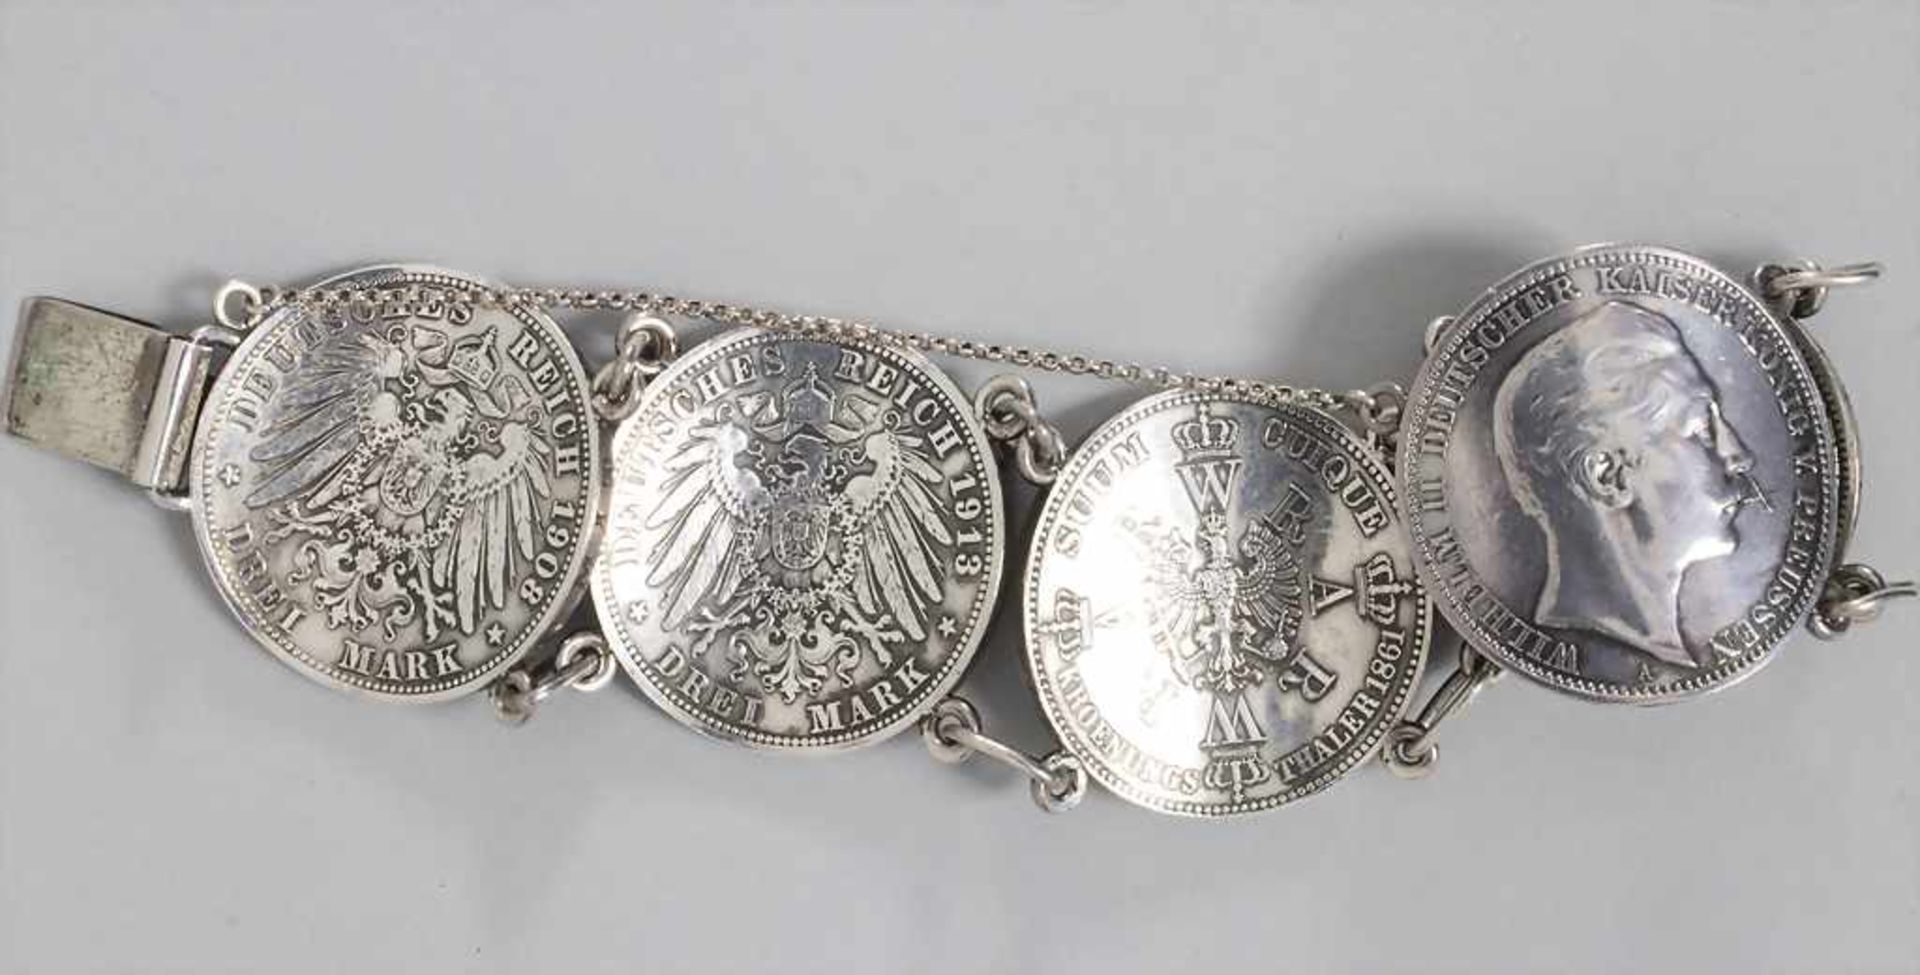 Münz-Armband, Preussen, um 1915 - Image 4 of 6